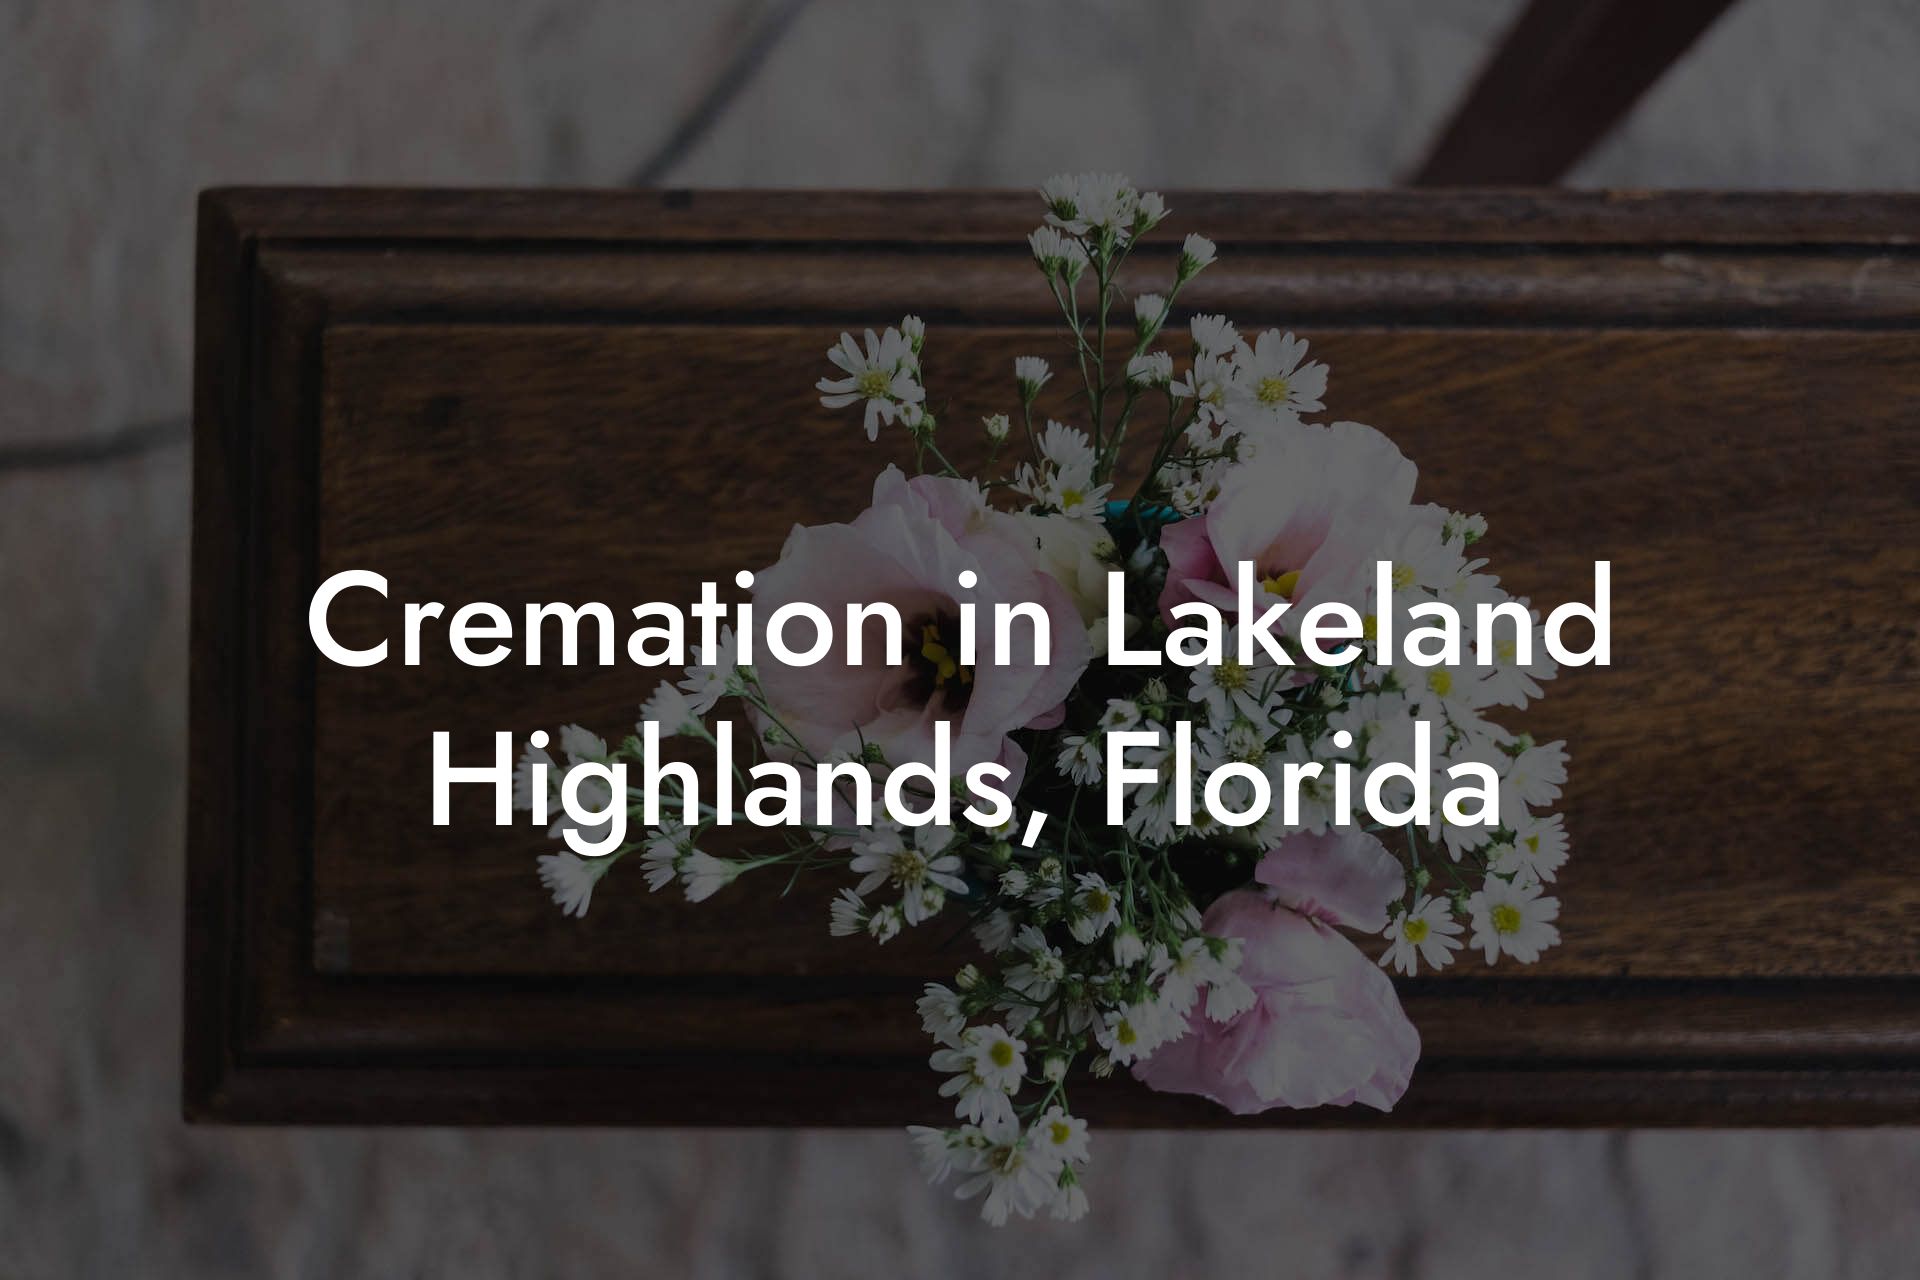 Cremation in Lakeland Highlands, Florida